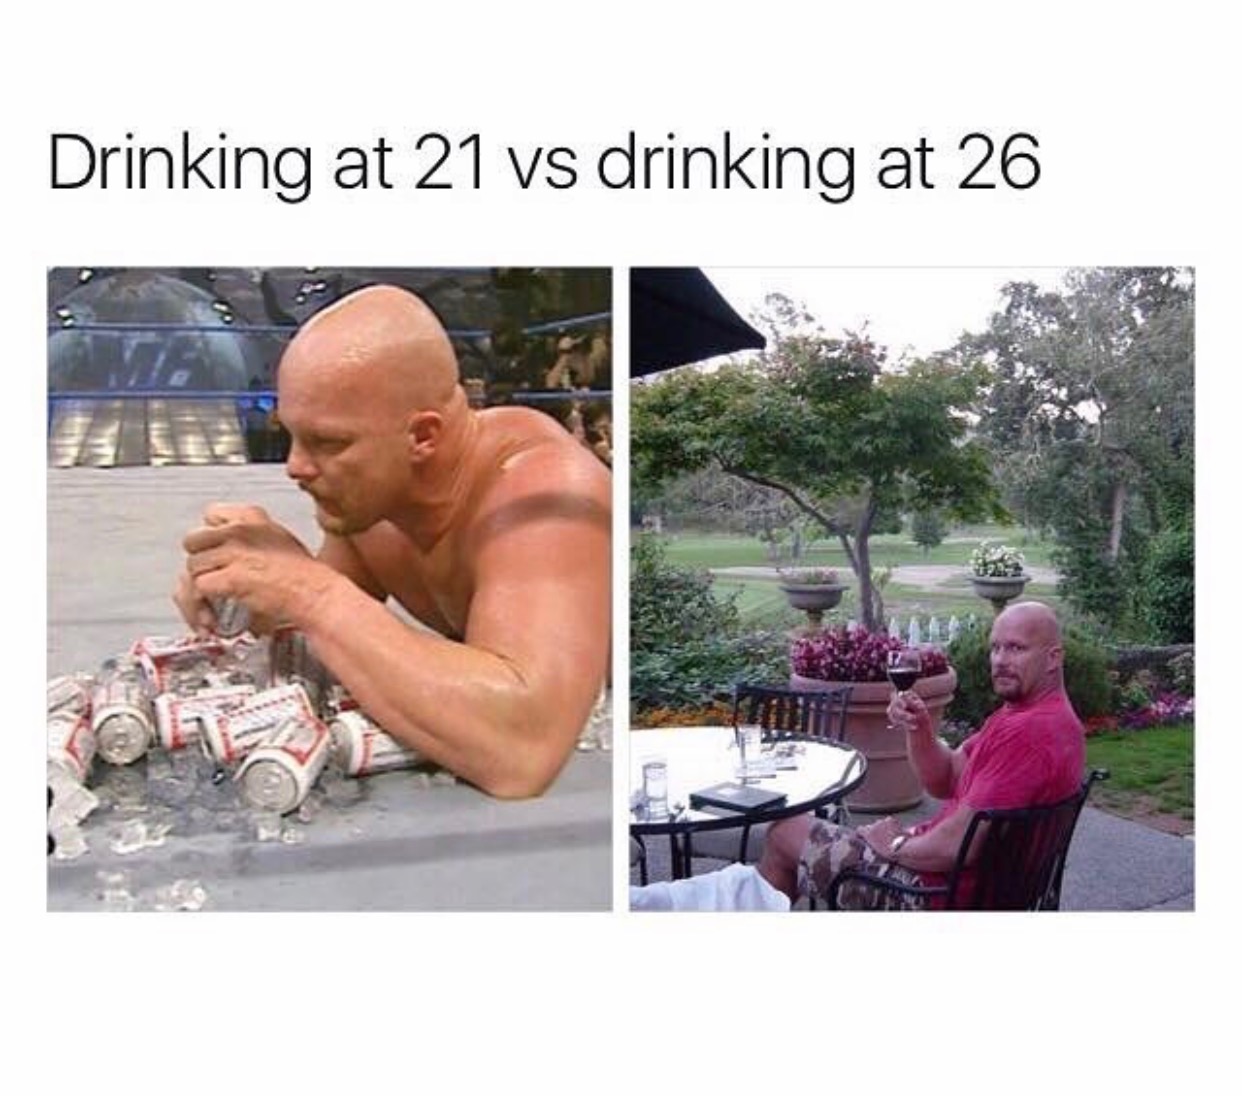 memes - lightweight drinker meme - Drinking at 21 vs drinking at 26